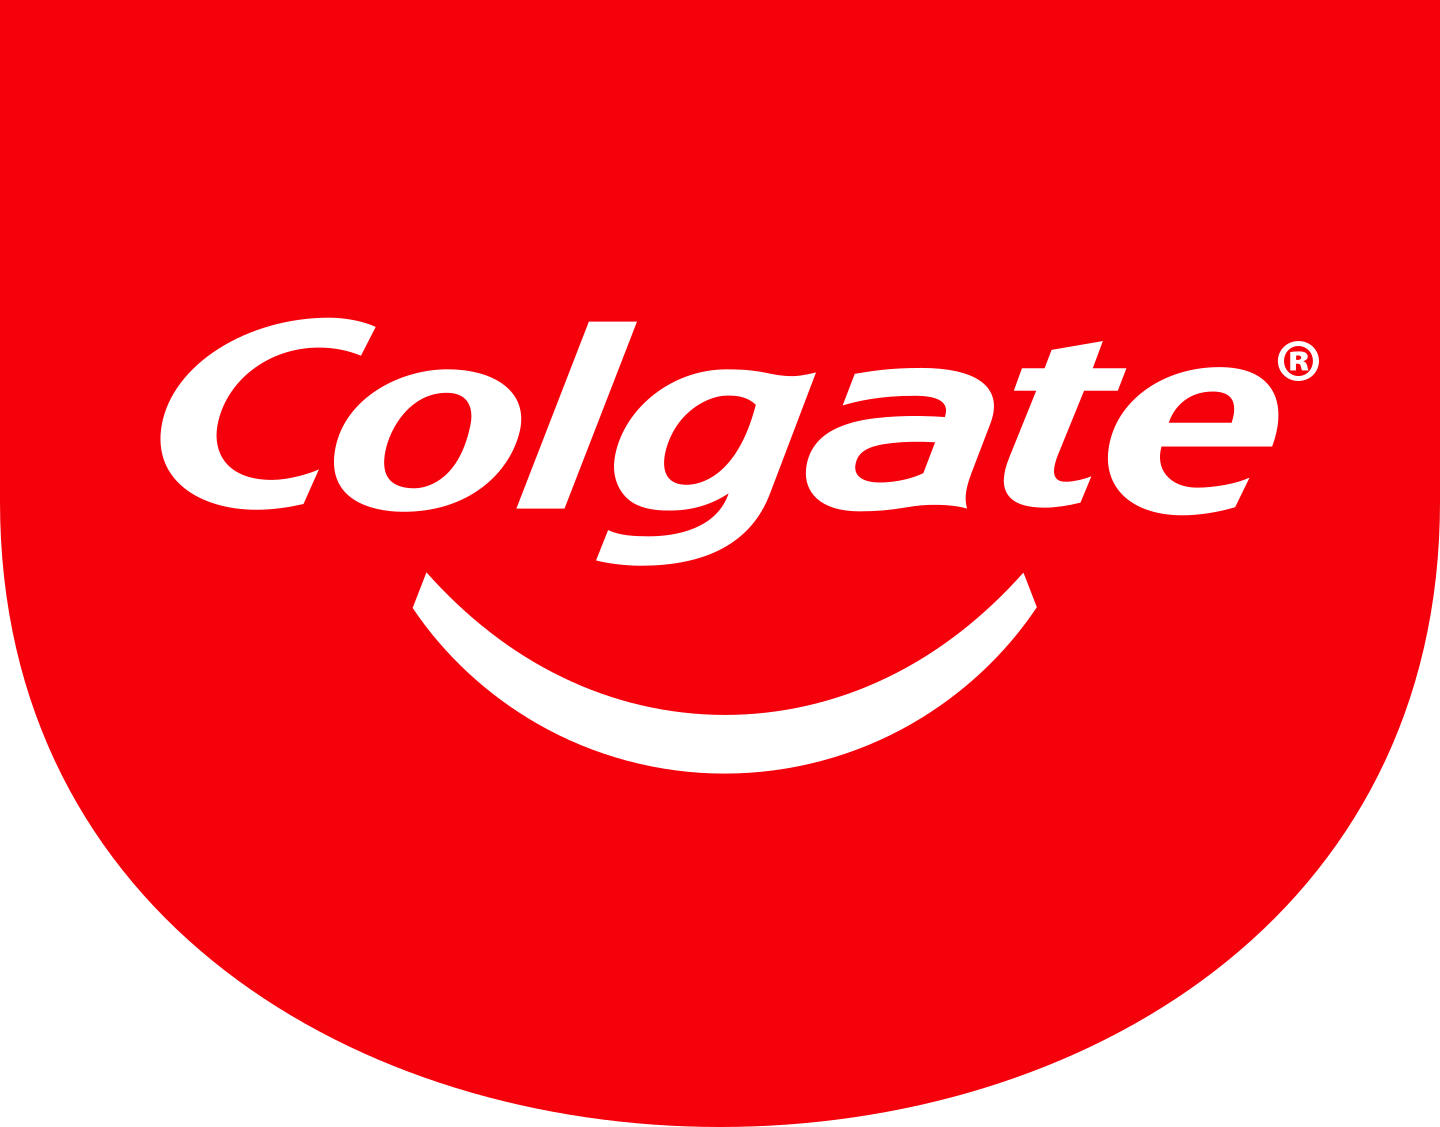 colgate logo 2 1 - Colgate Logo